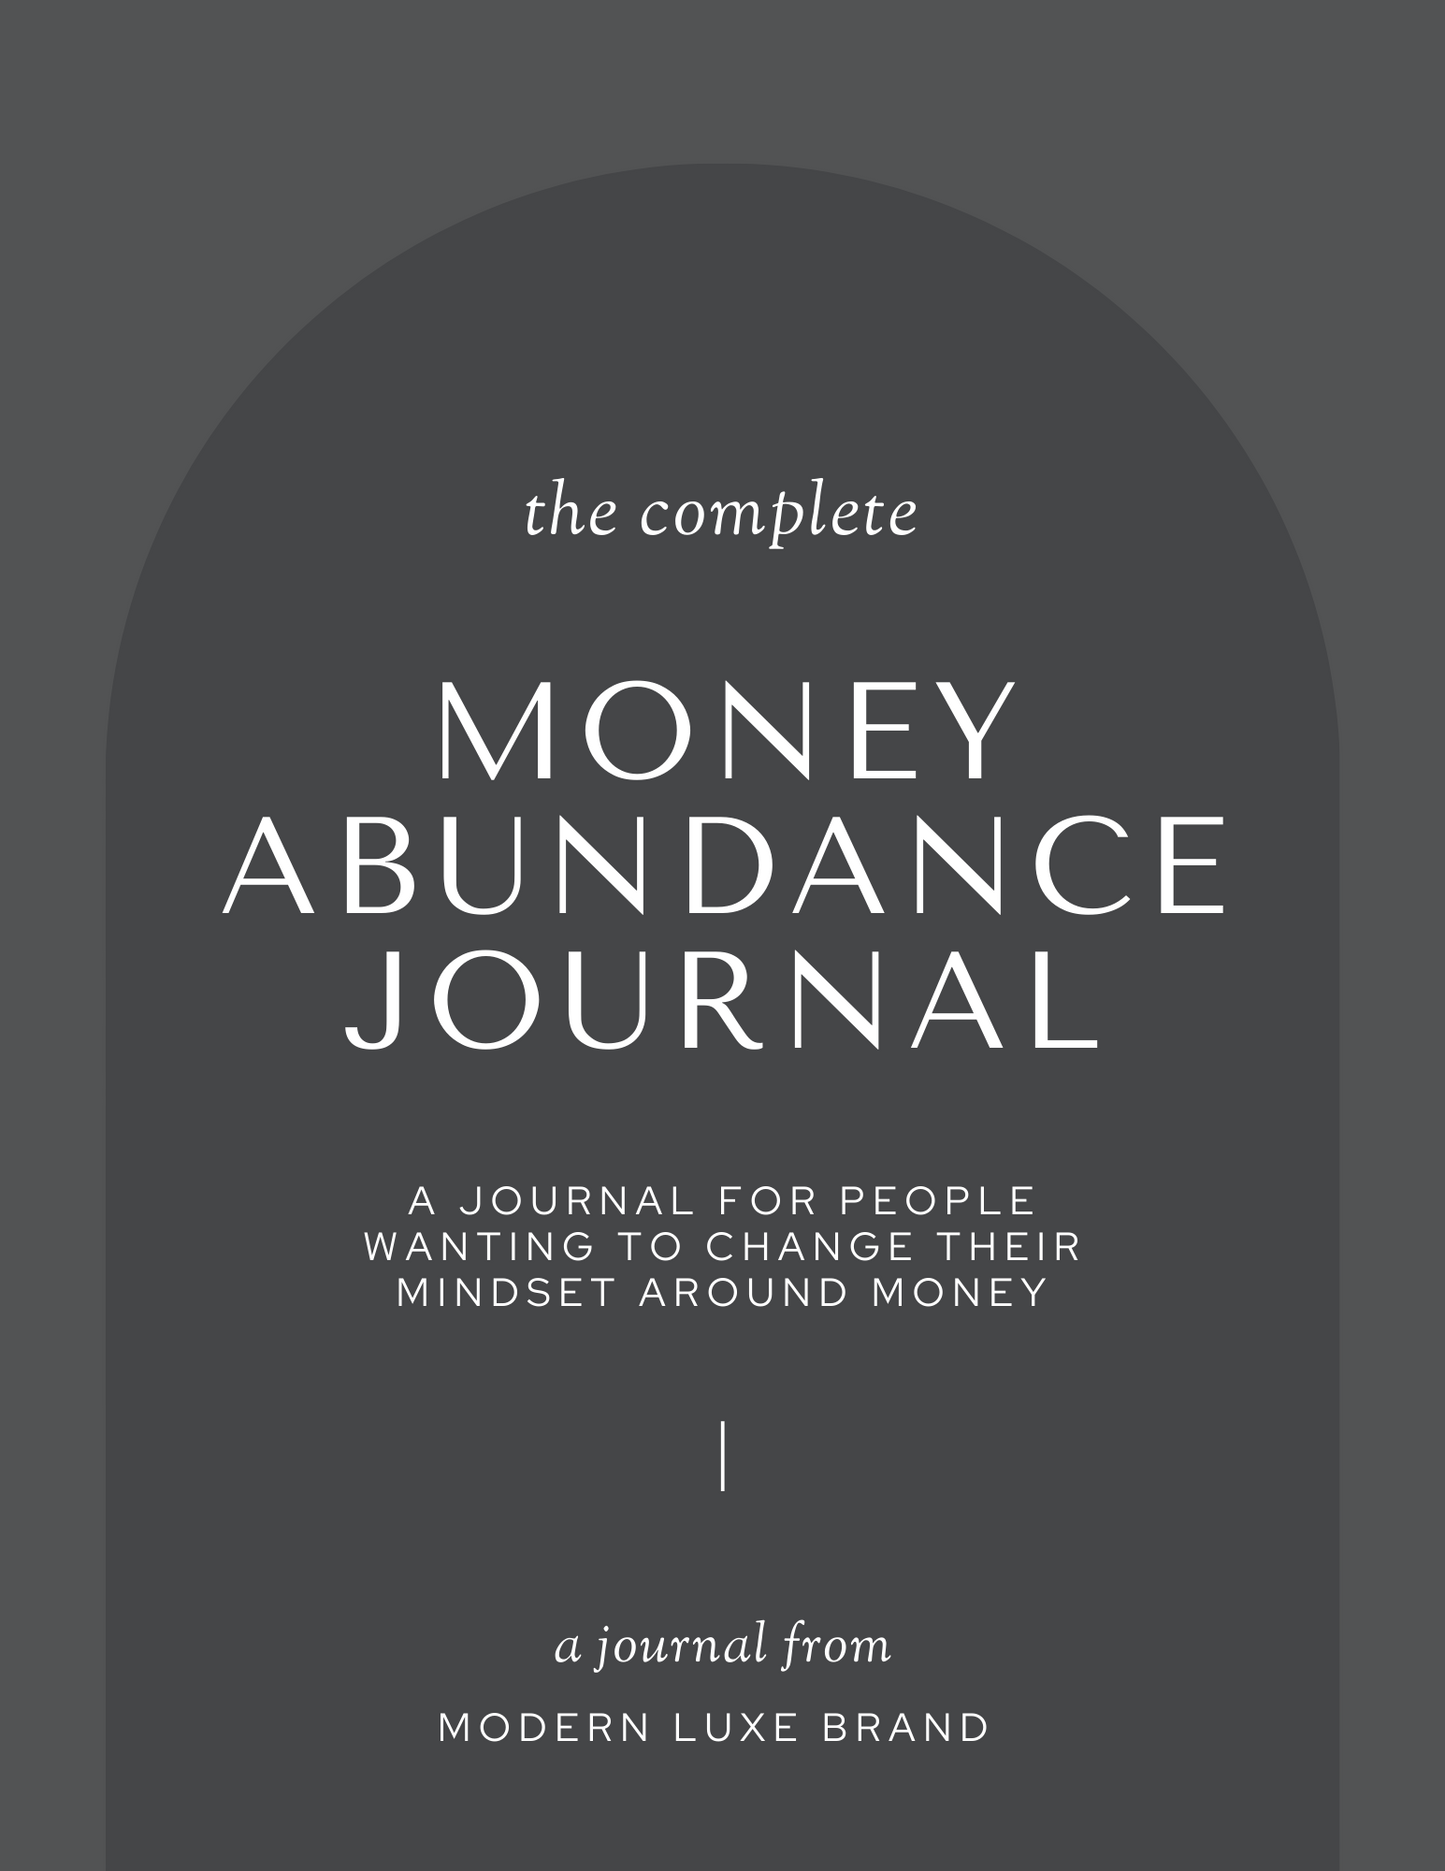 The Money Abundance Journal